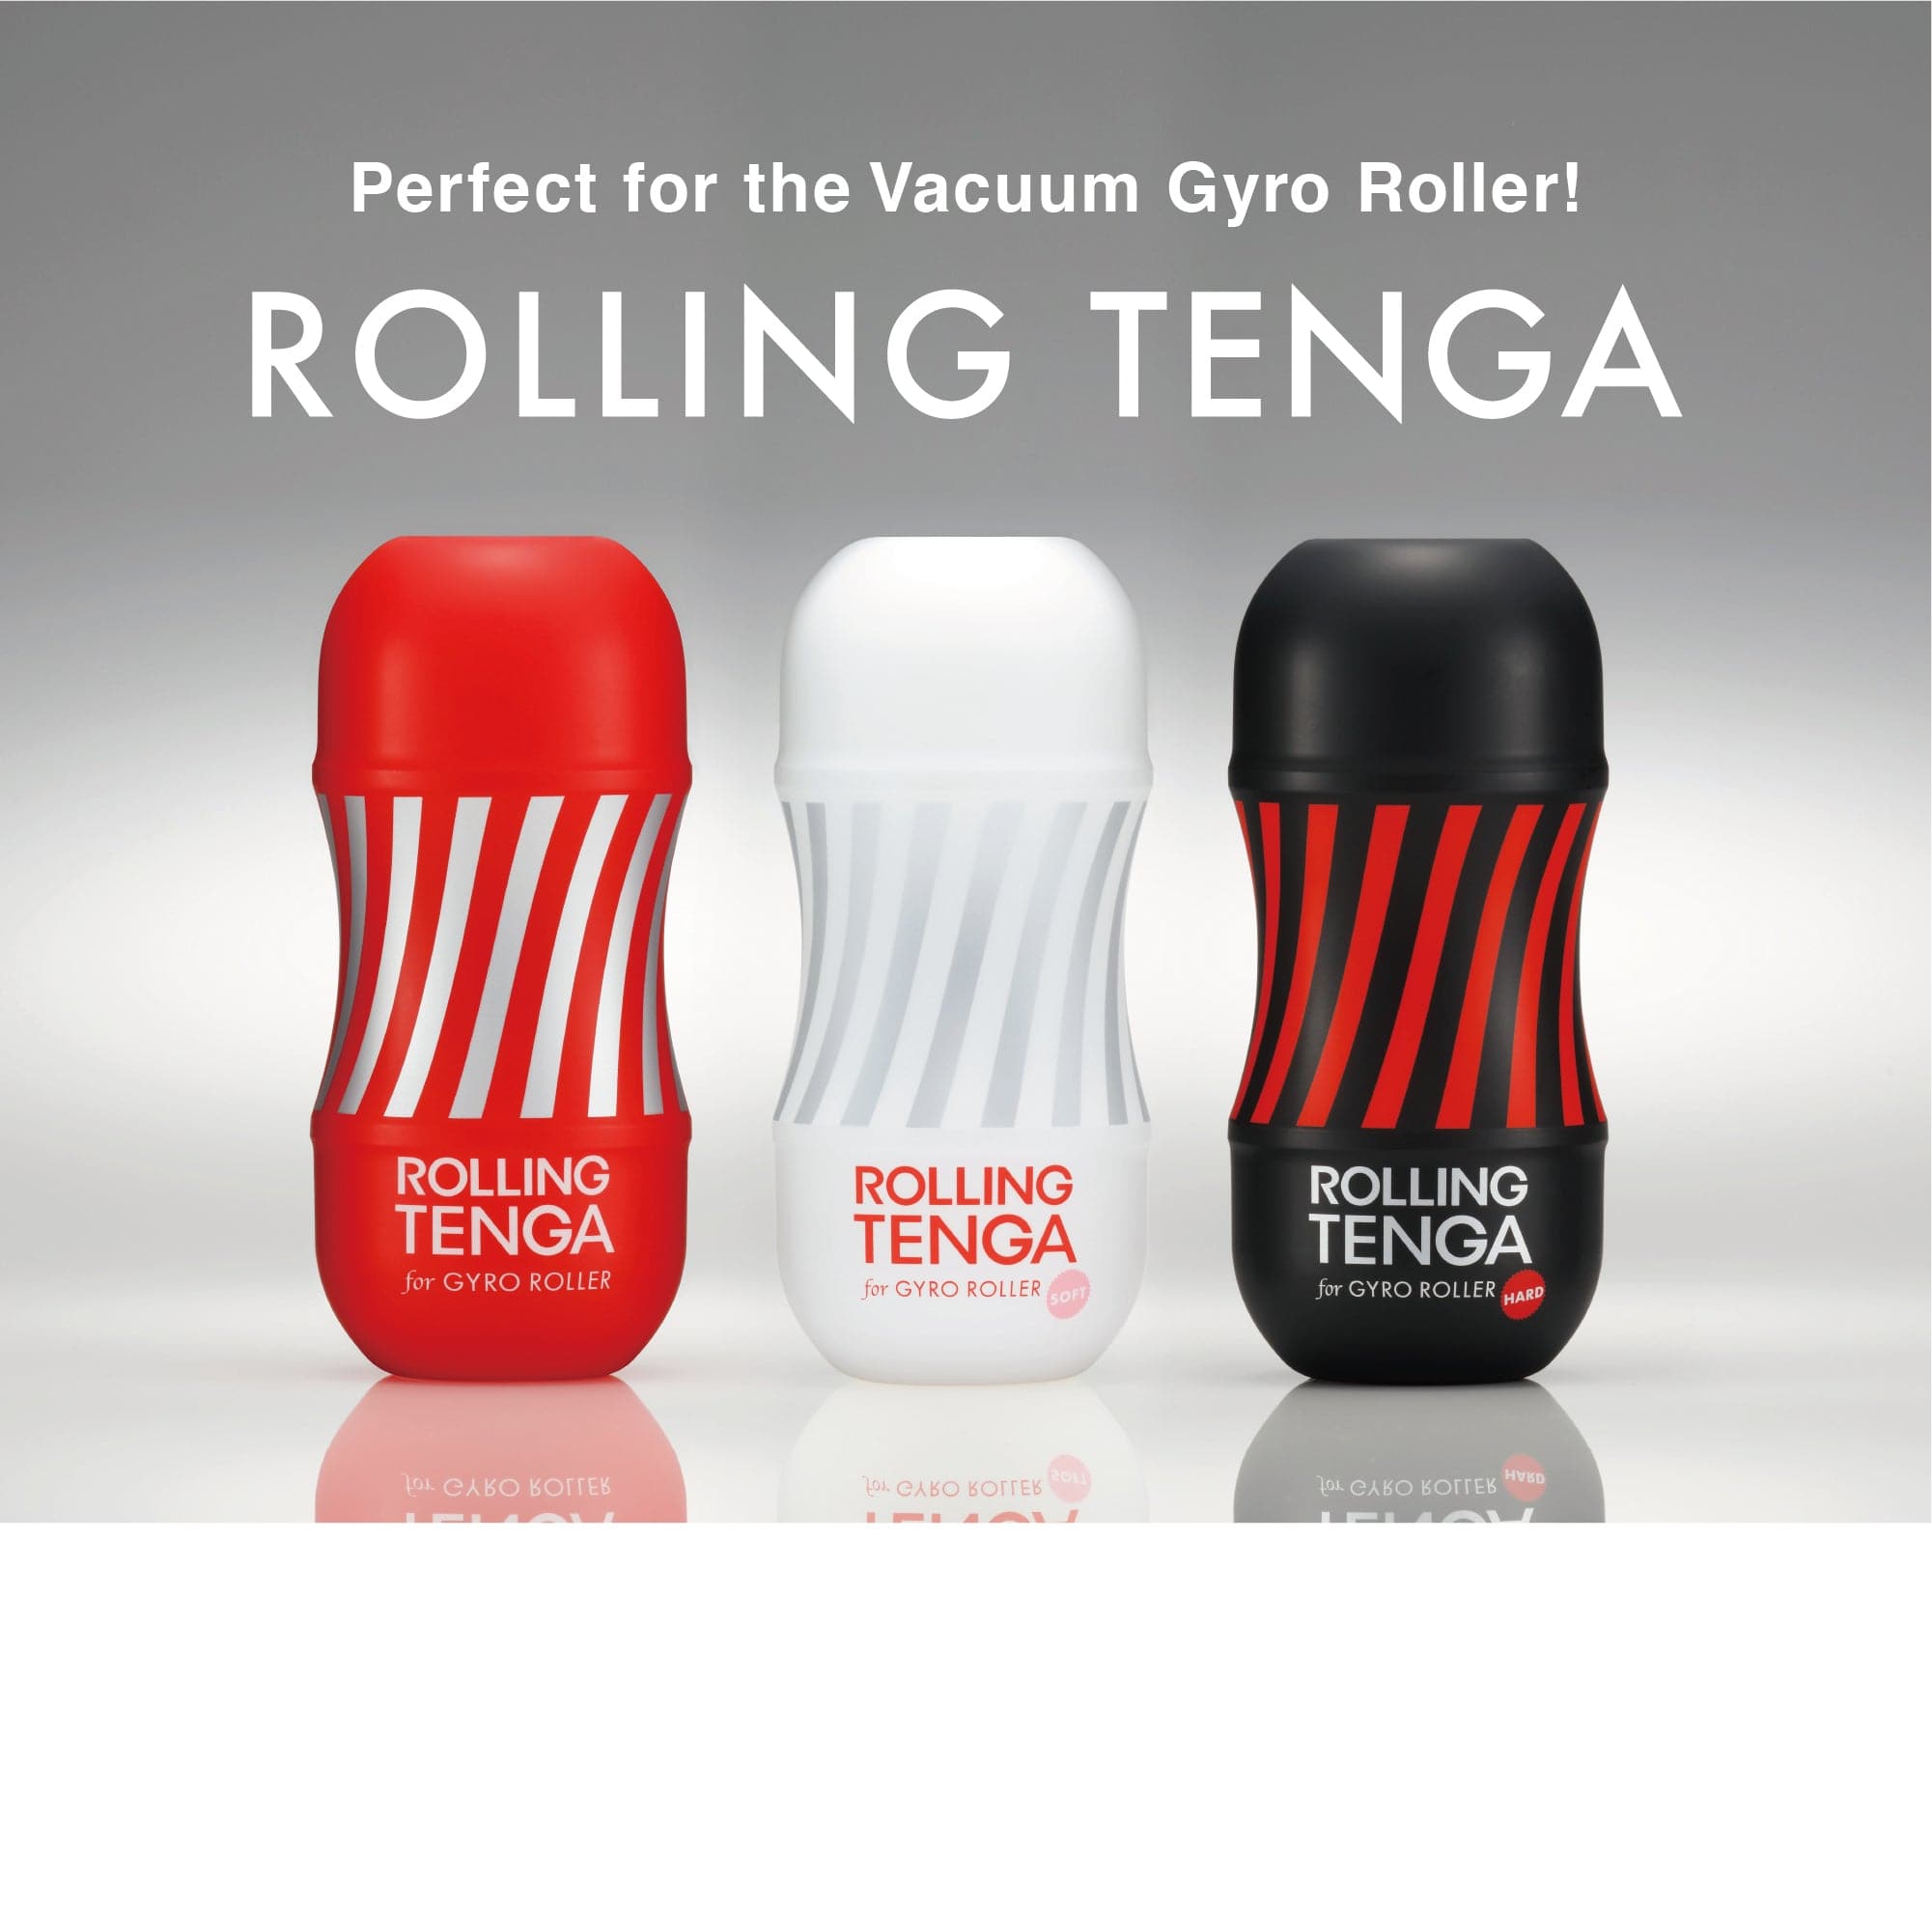 TENGA Vacuum Gyro Roller